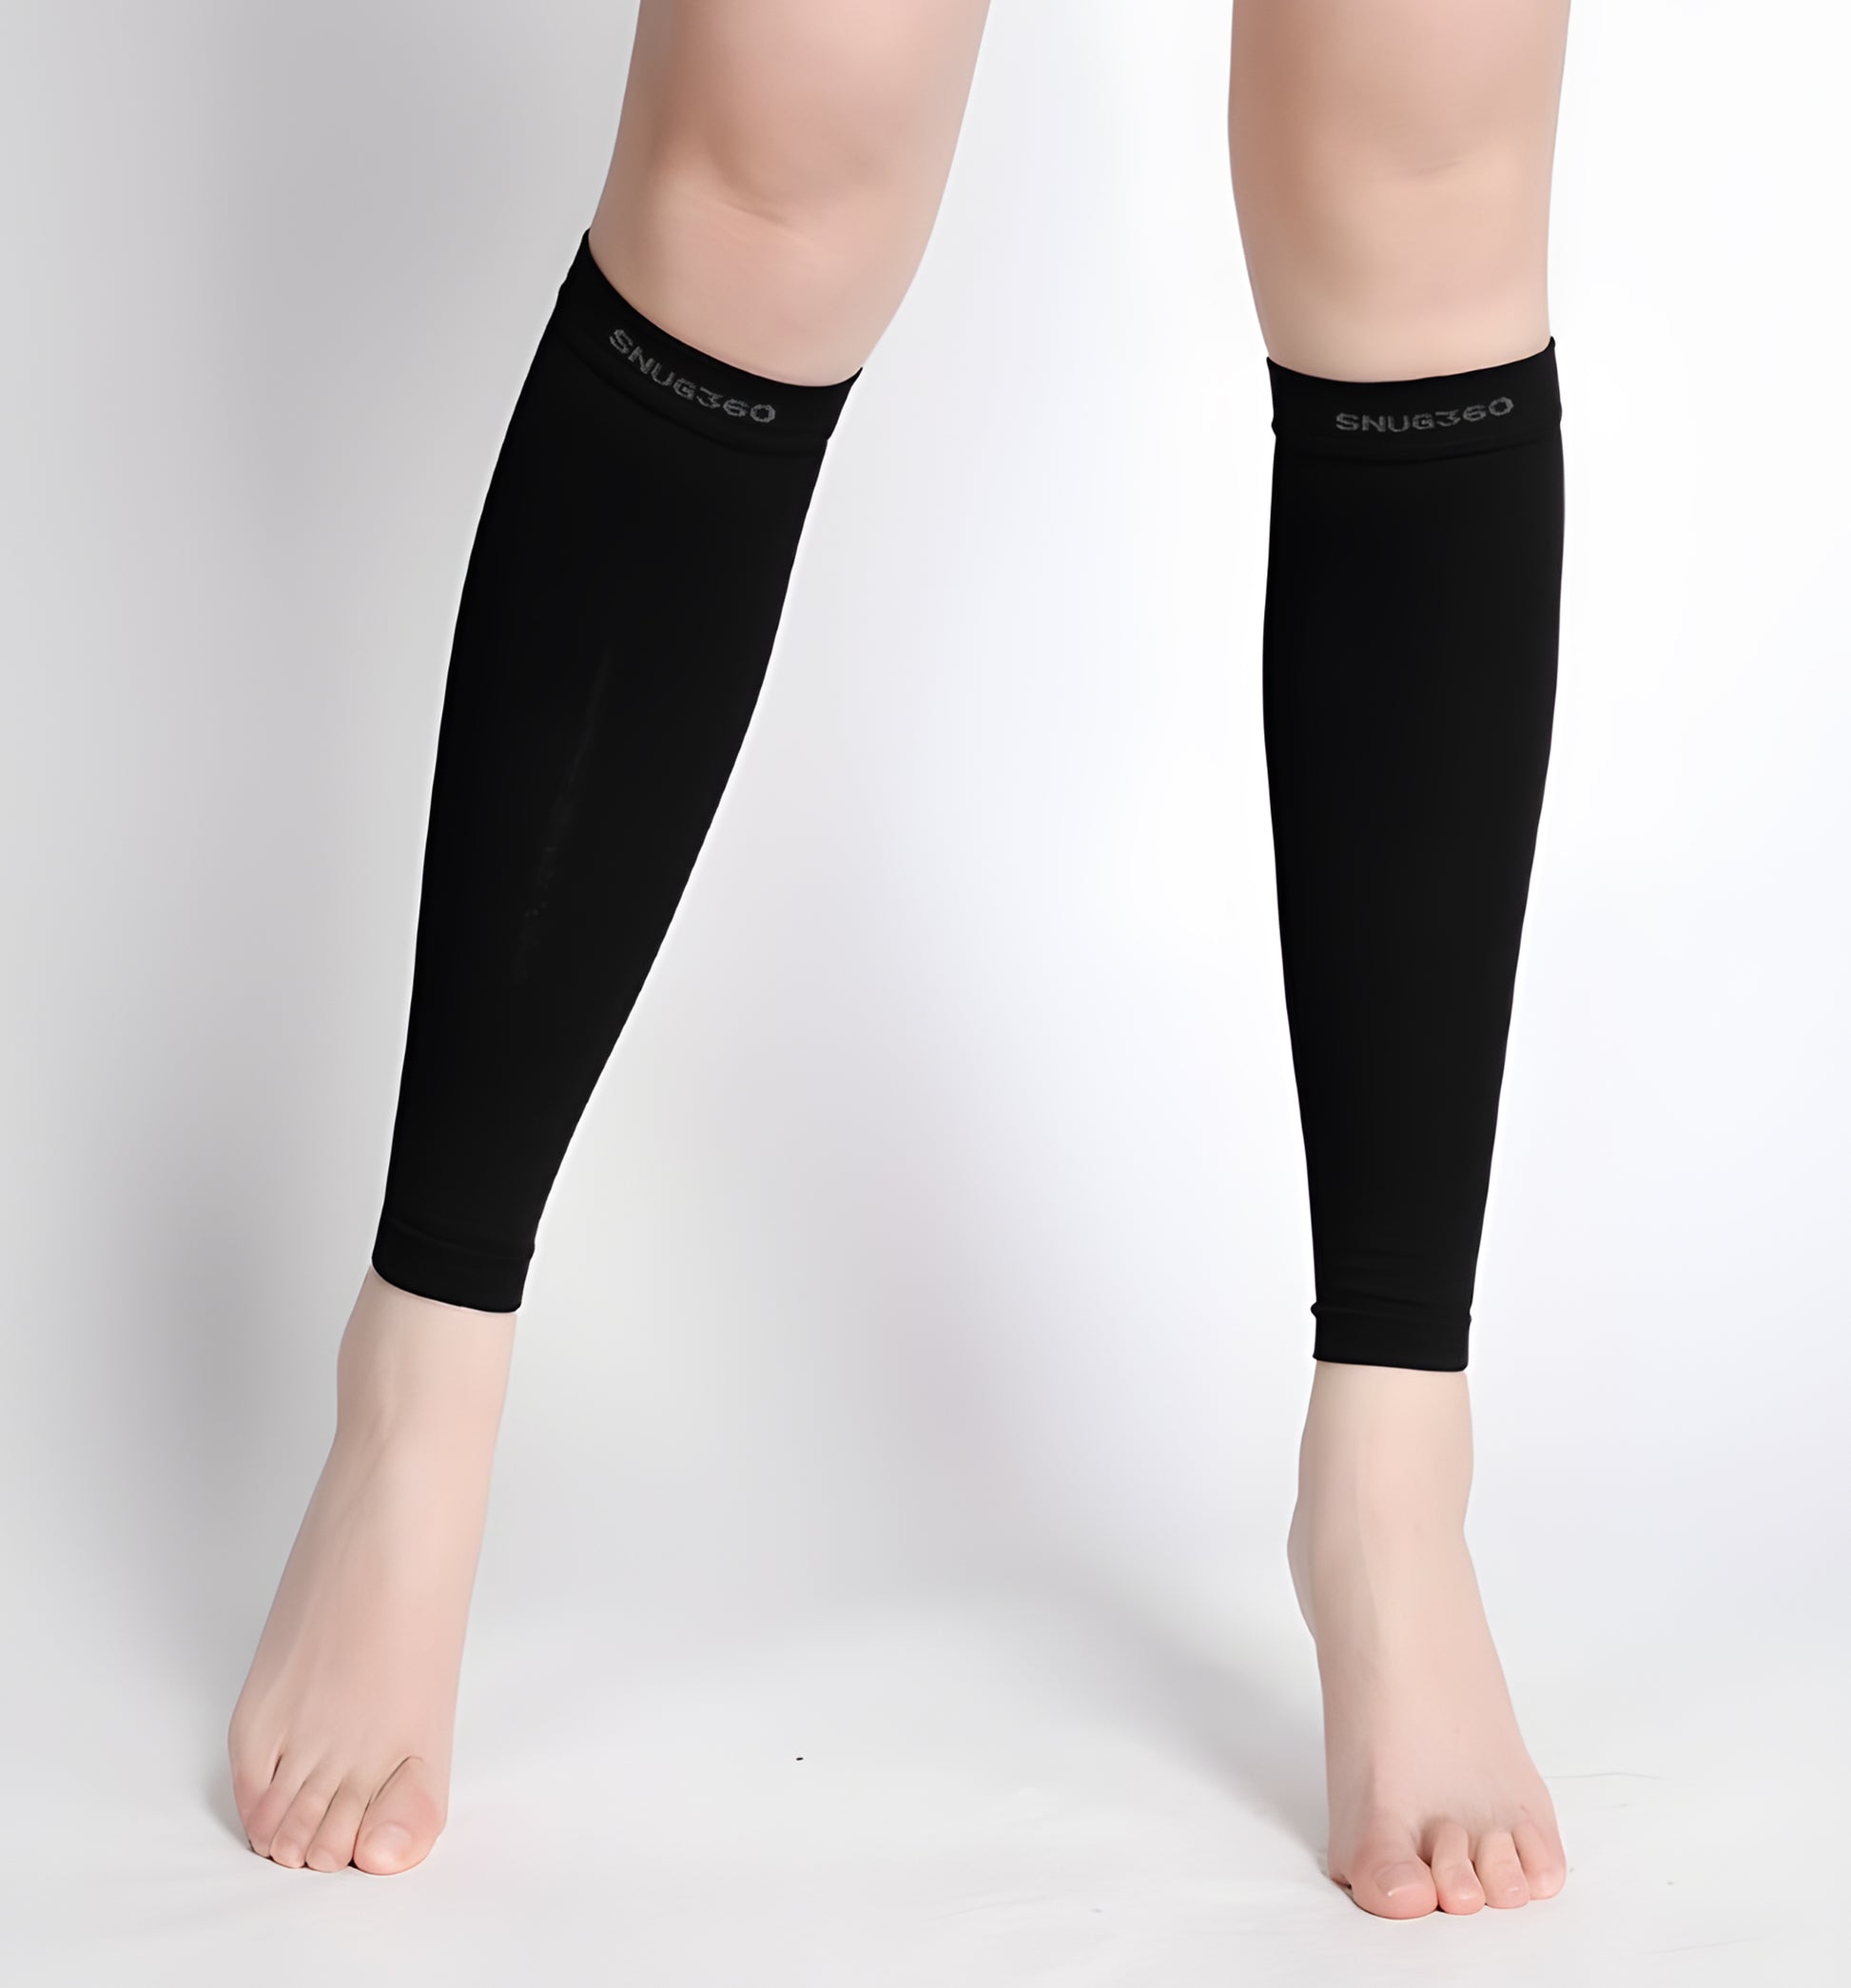 Calf Compression Leg Sleeves